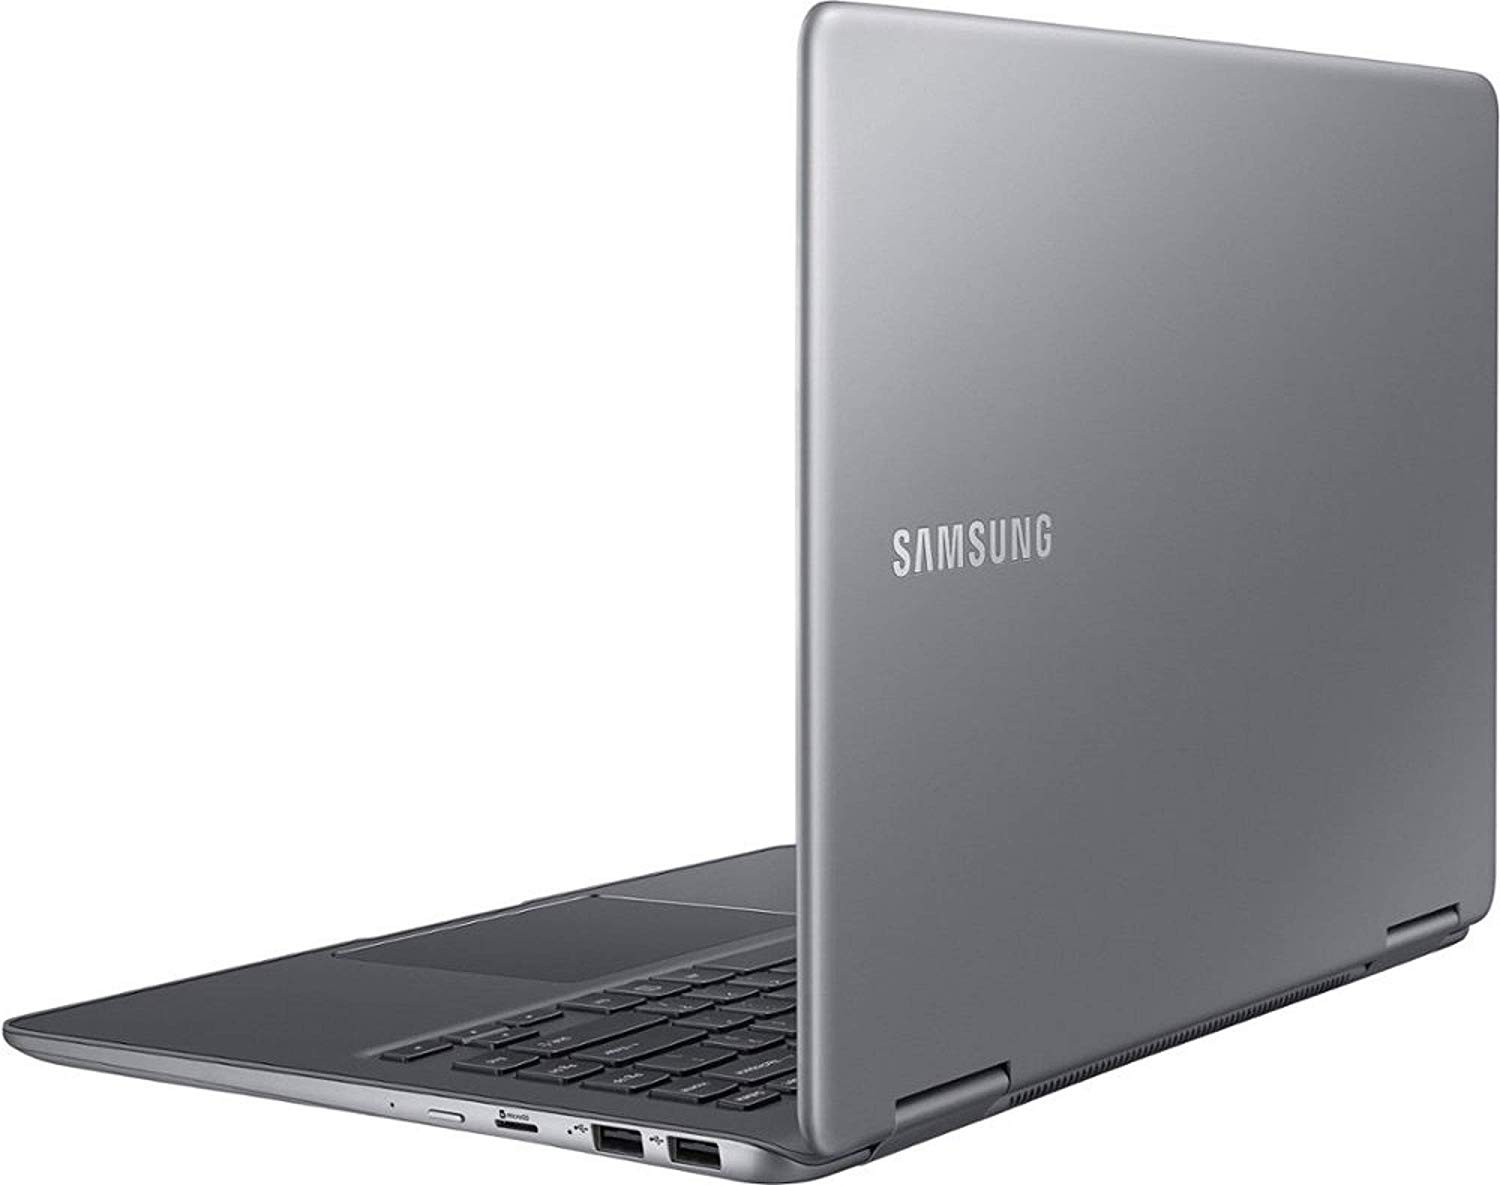 Samsung Laptop Reviews